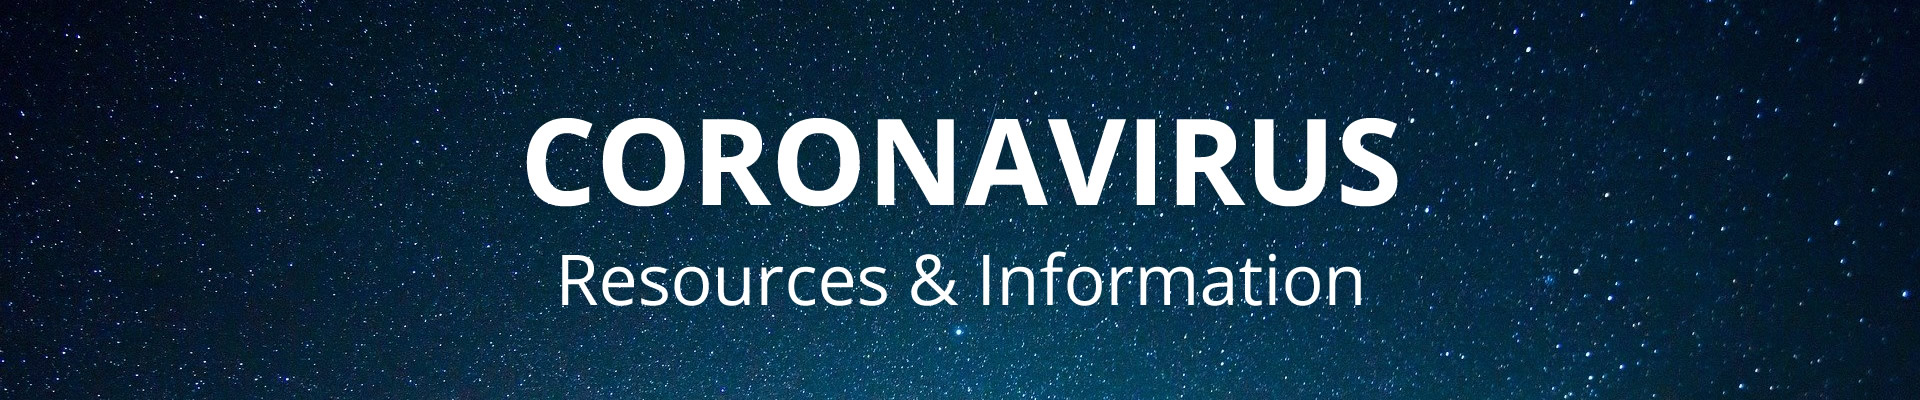 Coronavirus: Resources & Information